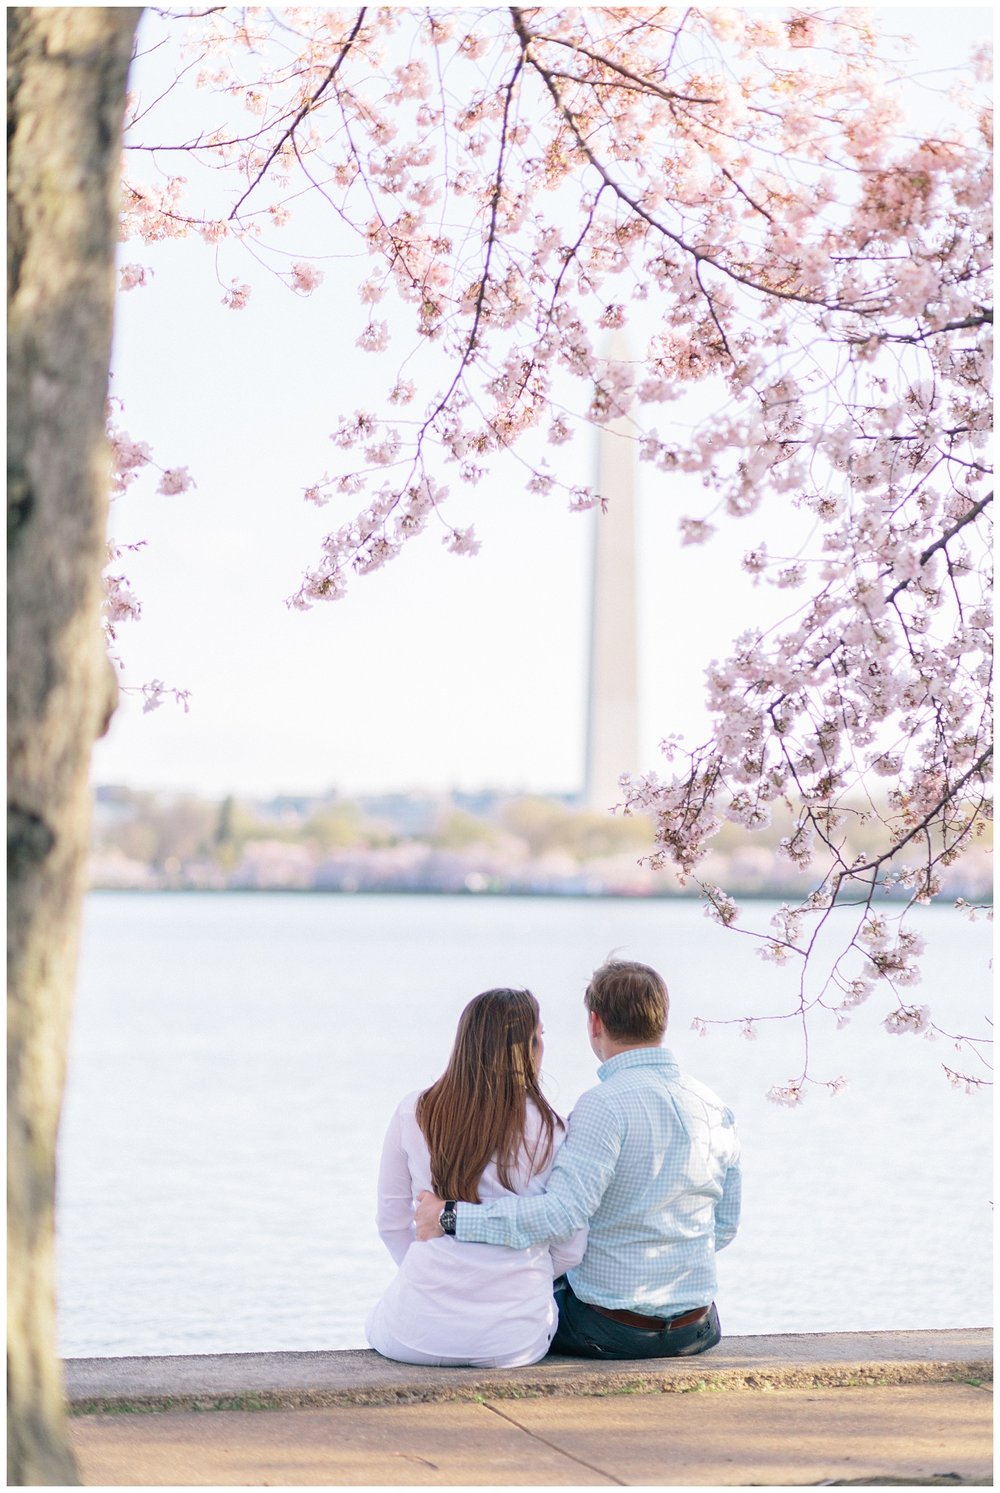 emily-belson-photography-cherry-blossom-engagement-leanne-danny-20.jpg